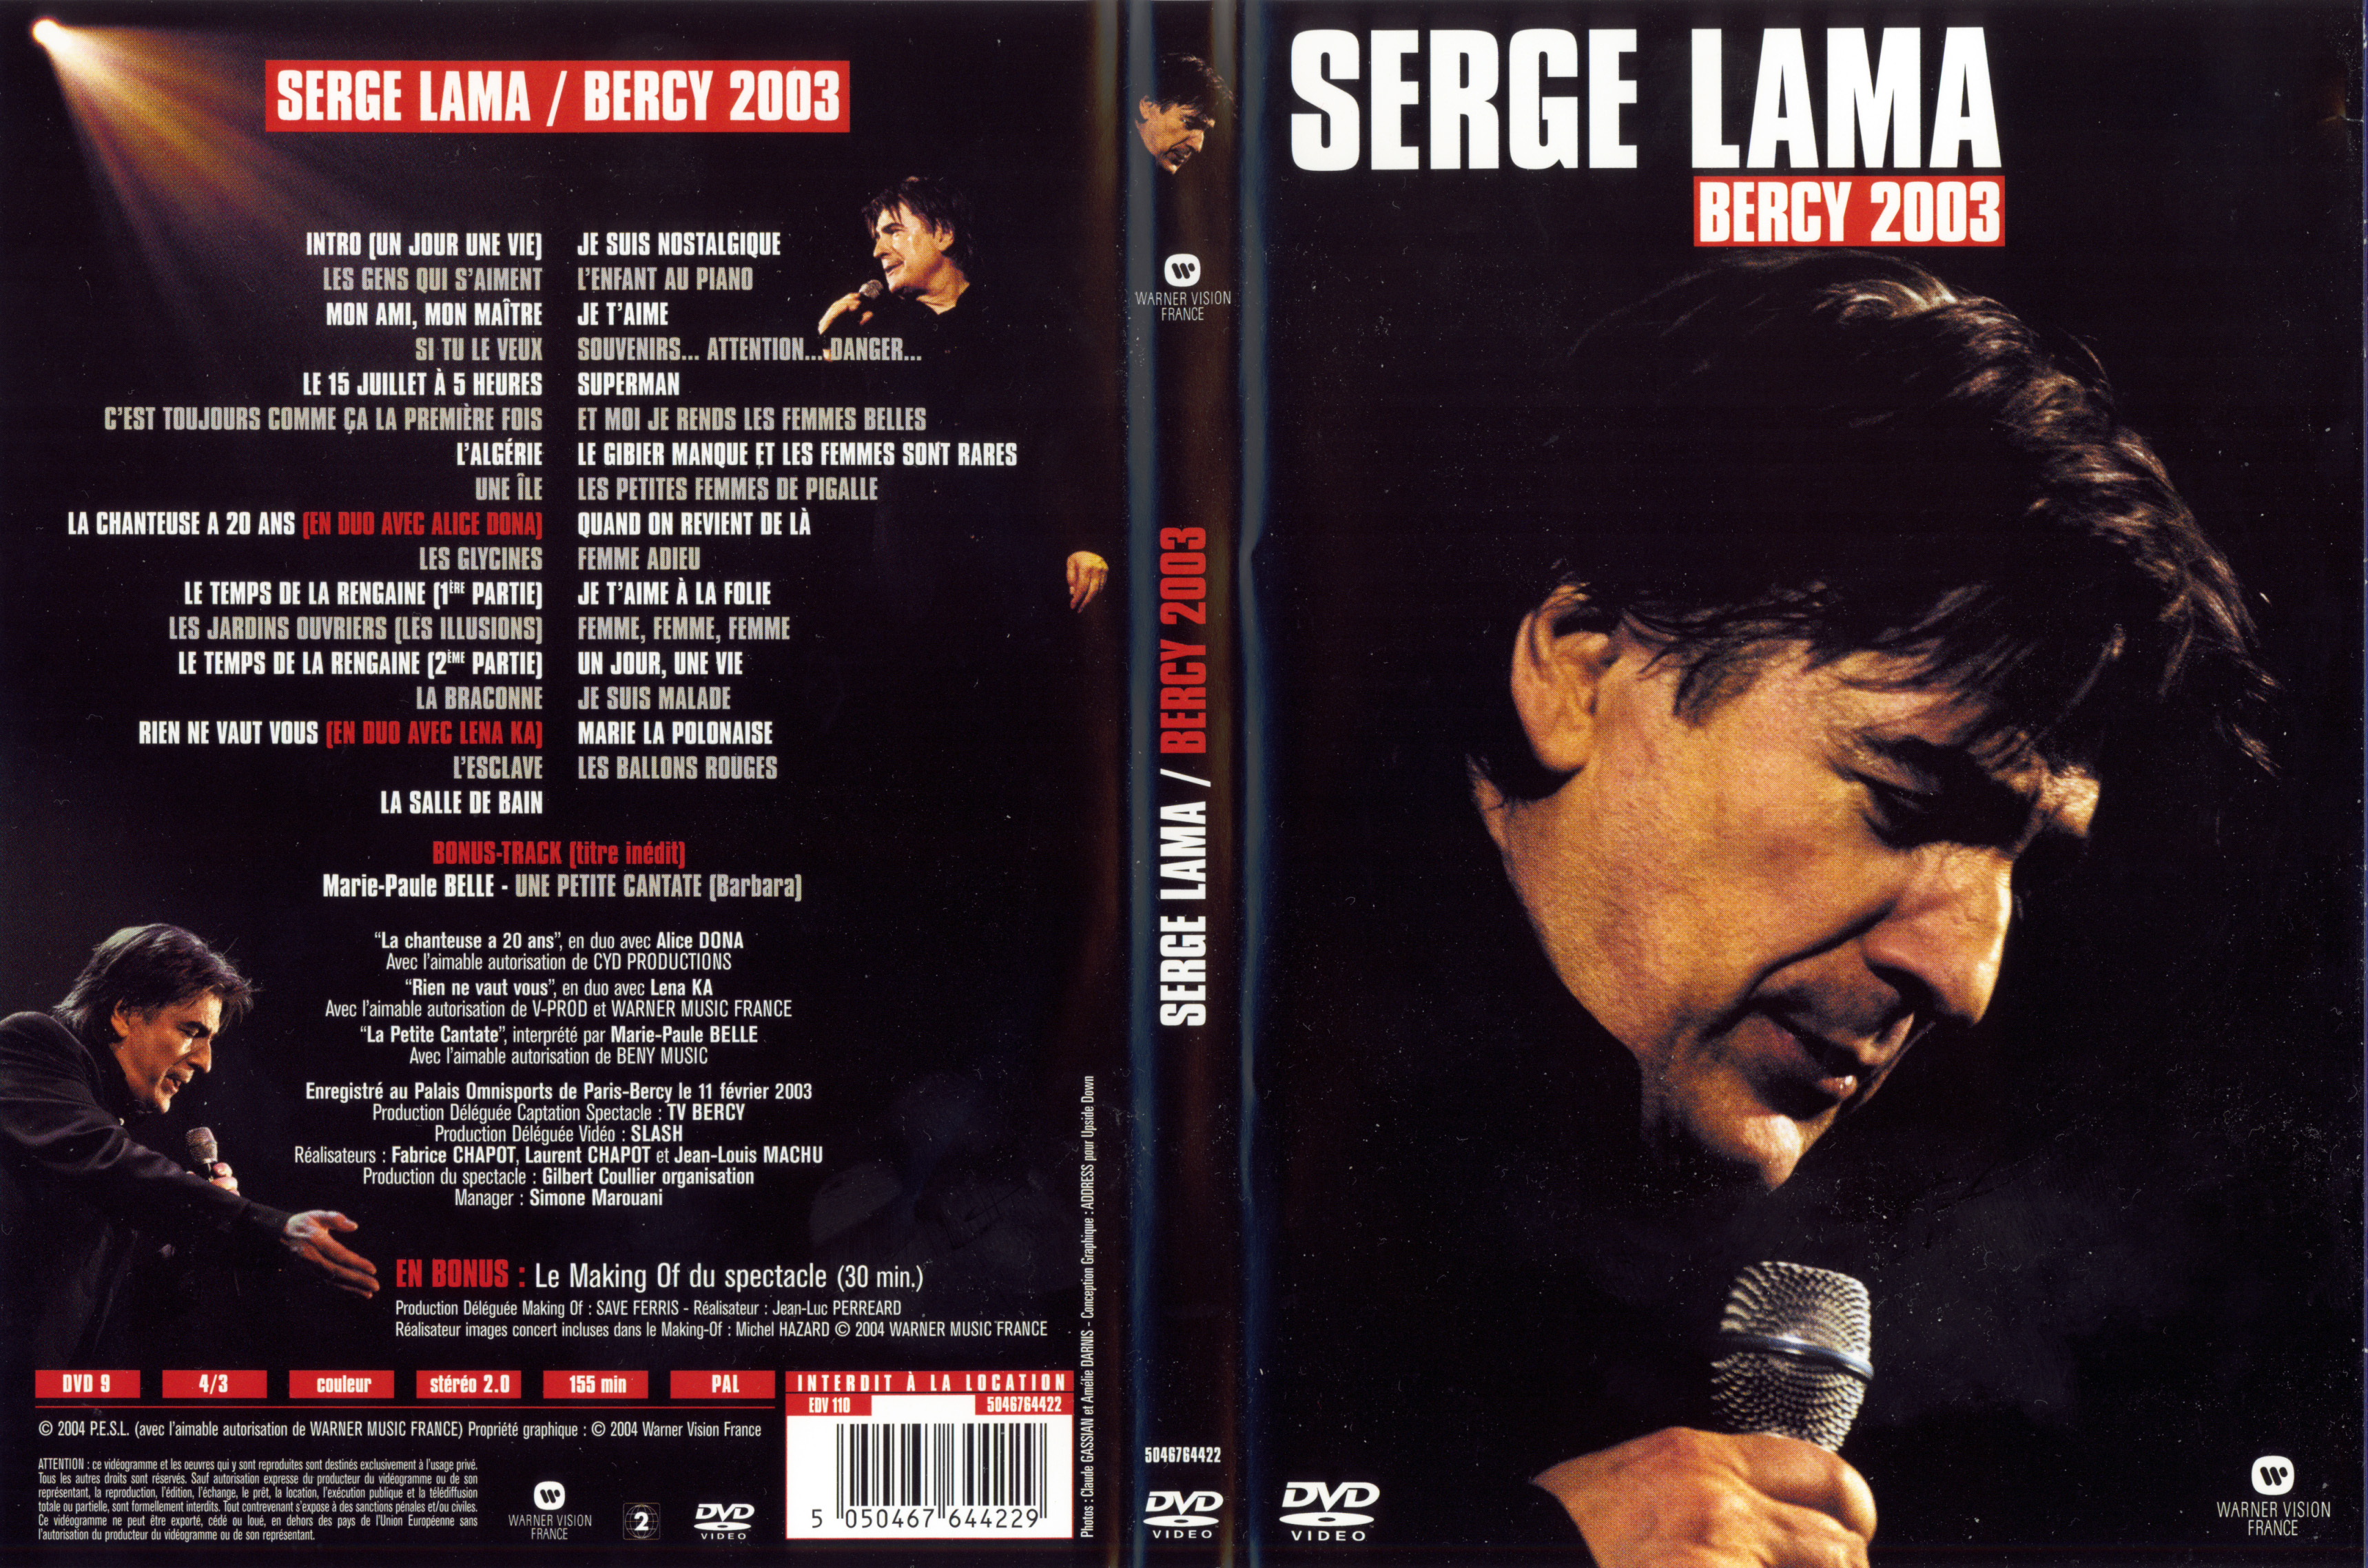 Jaquette DVD Serge Lama Bercy 2003